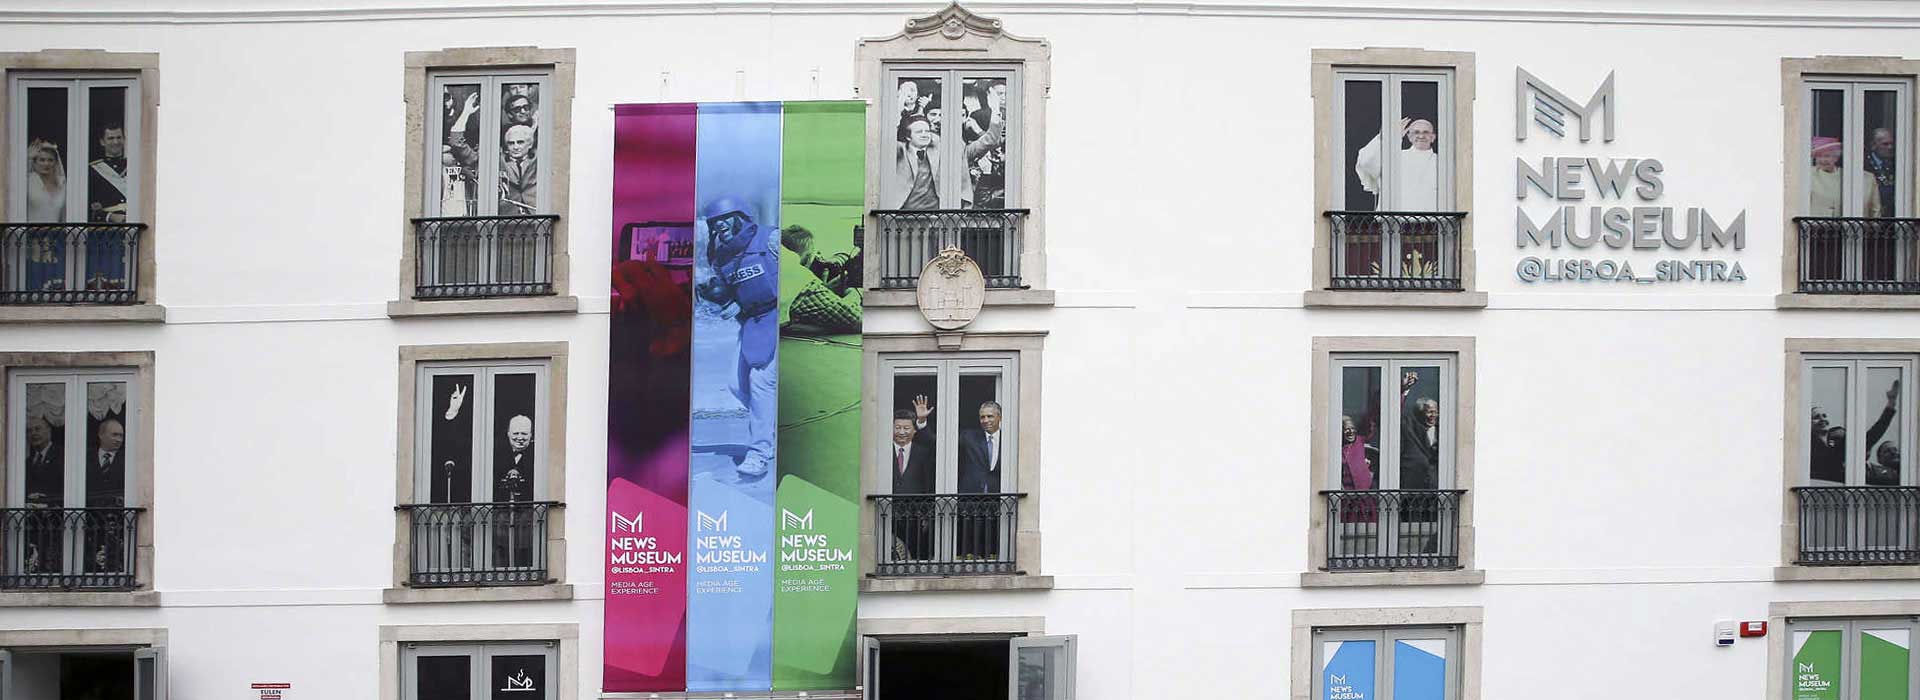 News Museum - Sintra